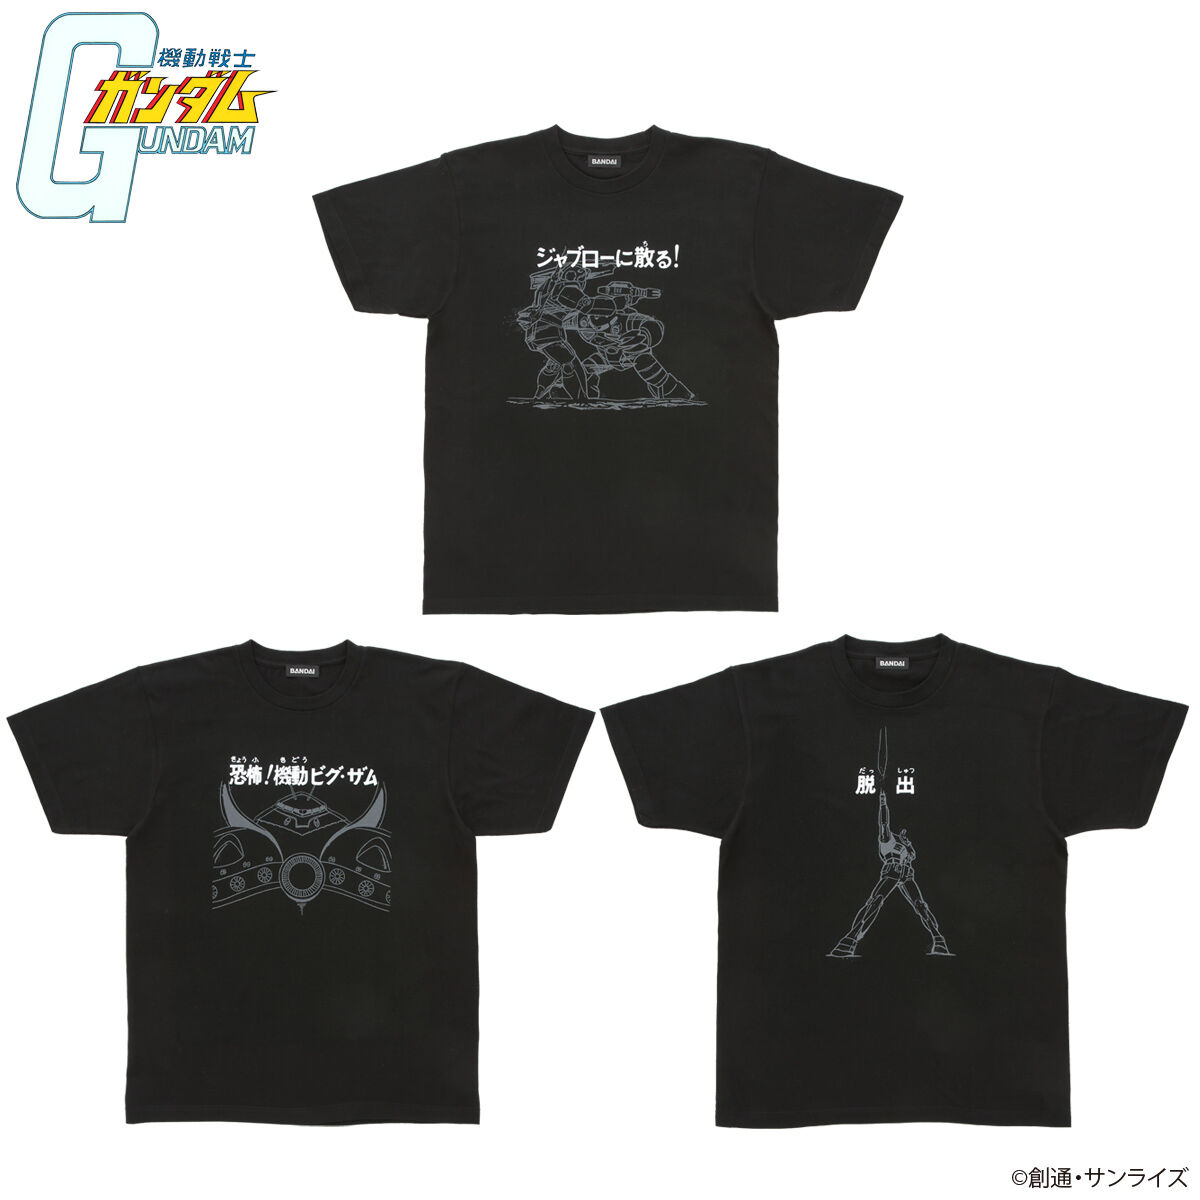 Mobile Suit Gundam Episode Title T-shirt II